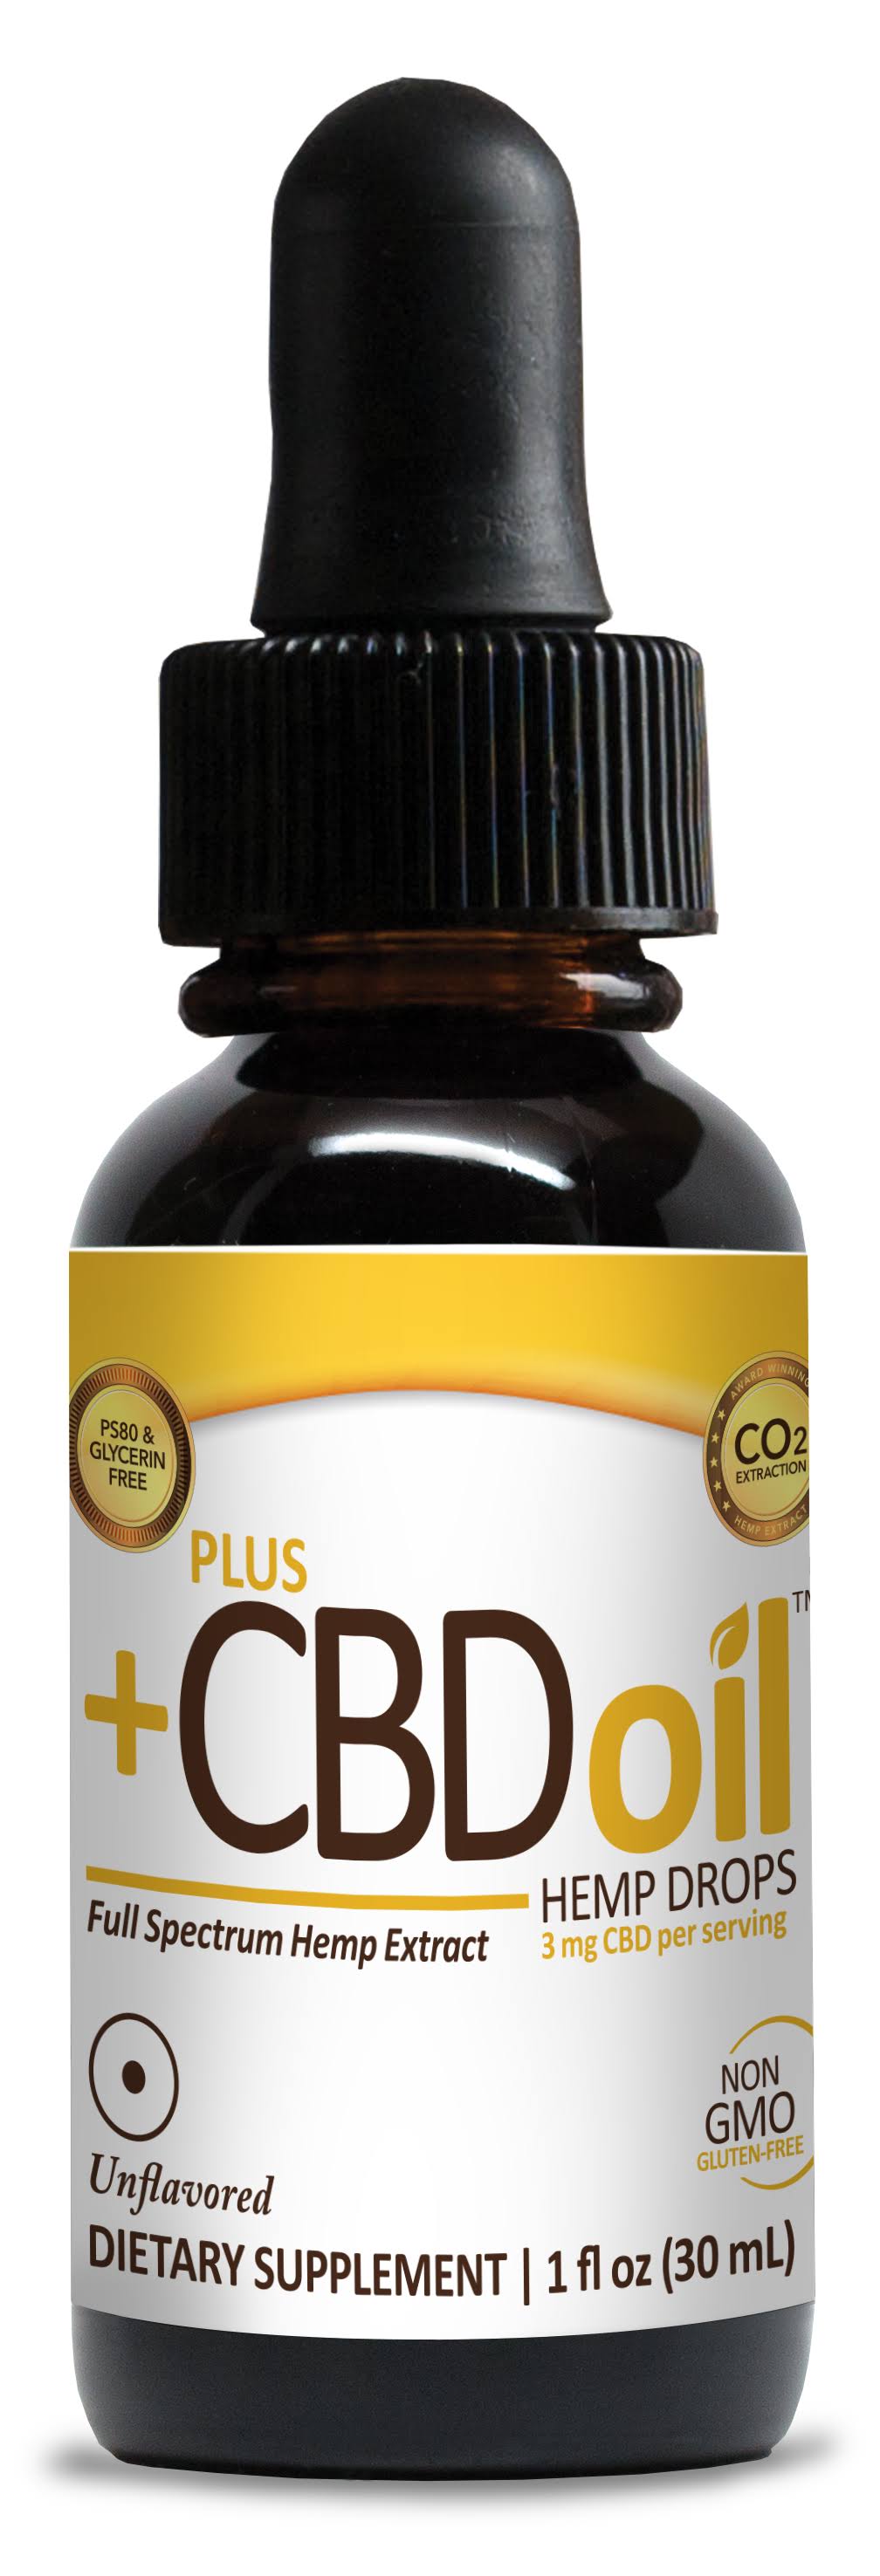 Plus +CBD Oil Gold Formula Drops - Unflavored, 1 fl oz